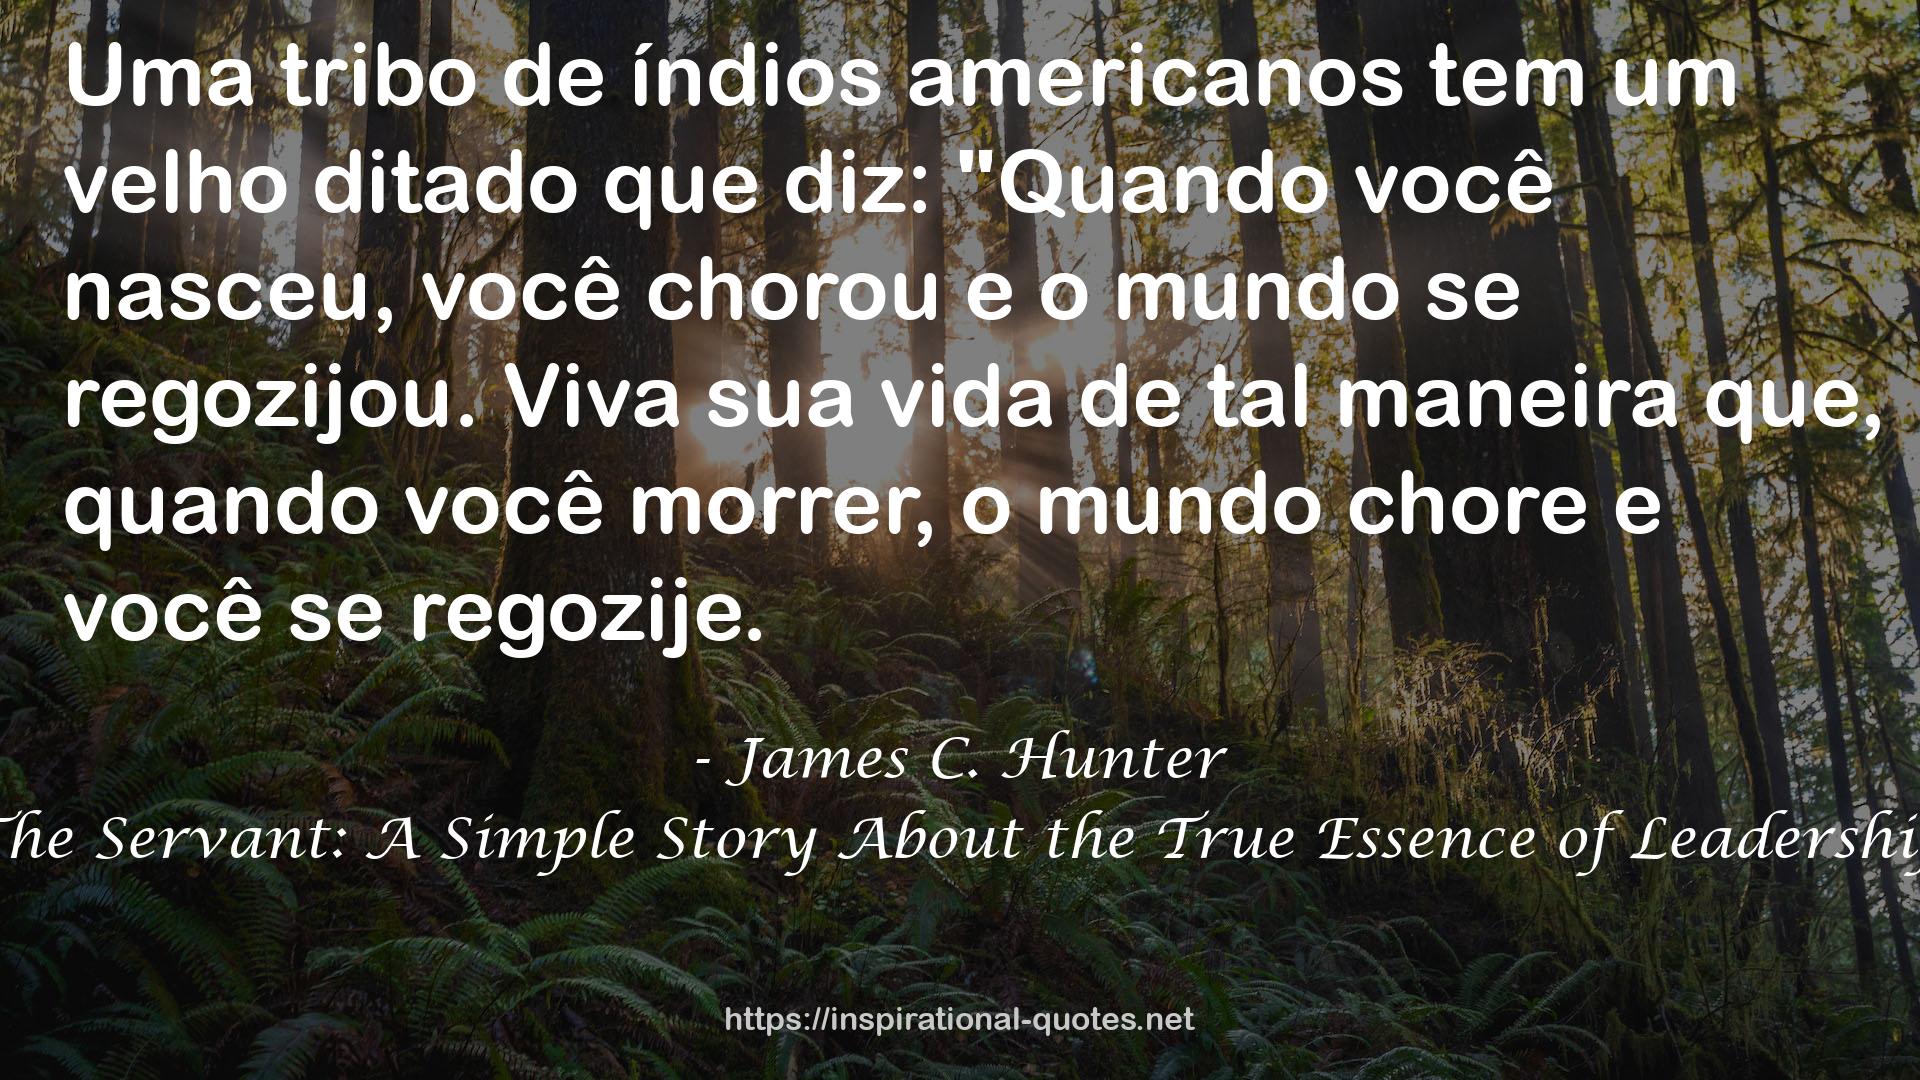 James C. Hunter QUOTES